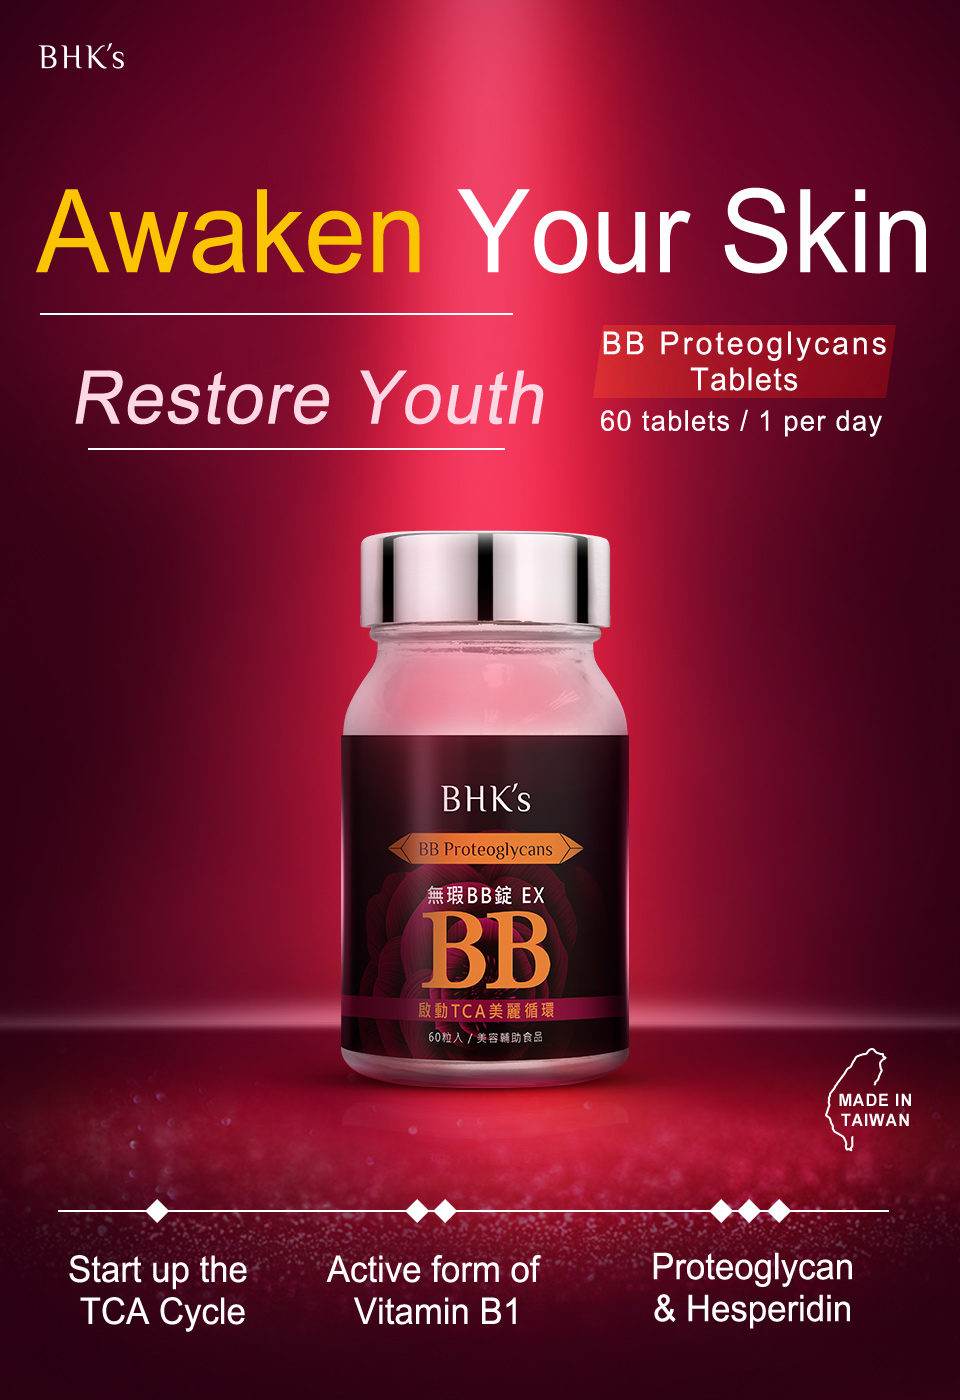 BHK's BB Proteoglycans adds high unit vitamin B1.